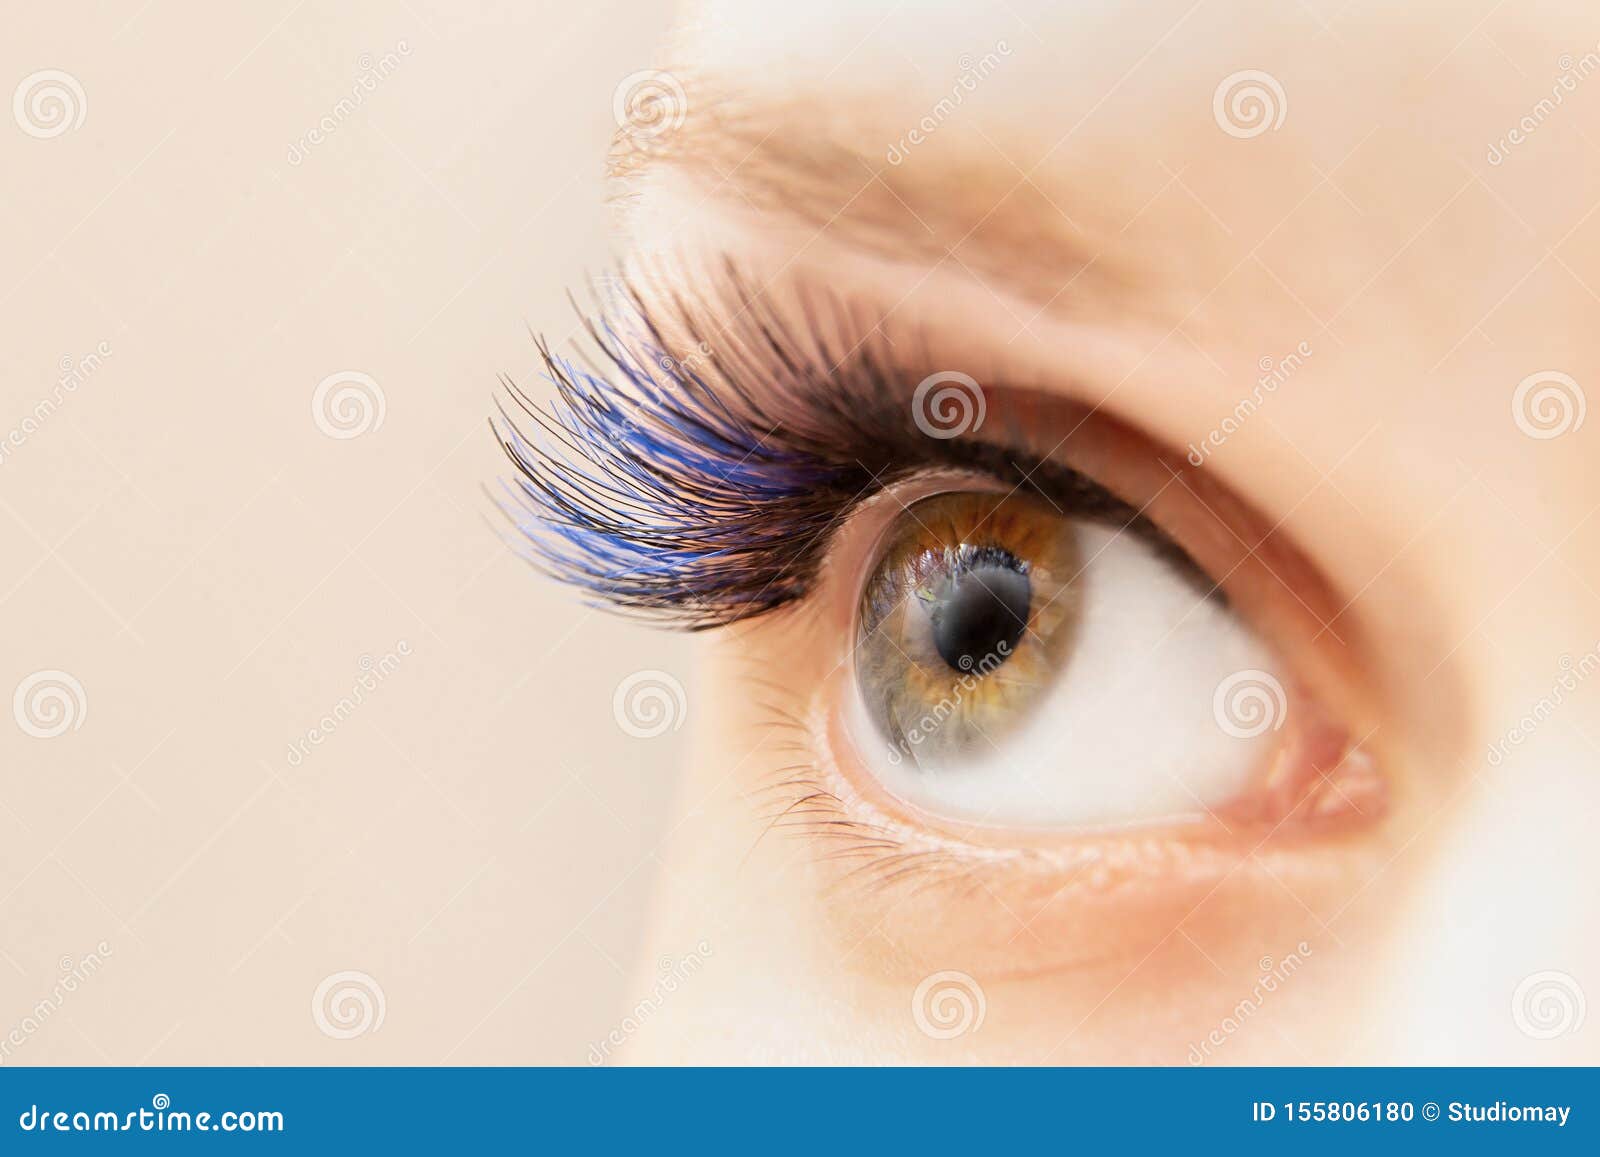 blue color eyelash extensions. trendy false lash style close-up, eye macro